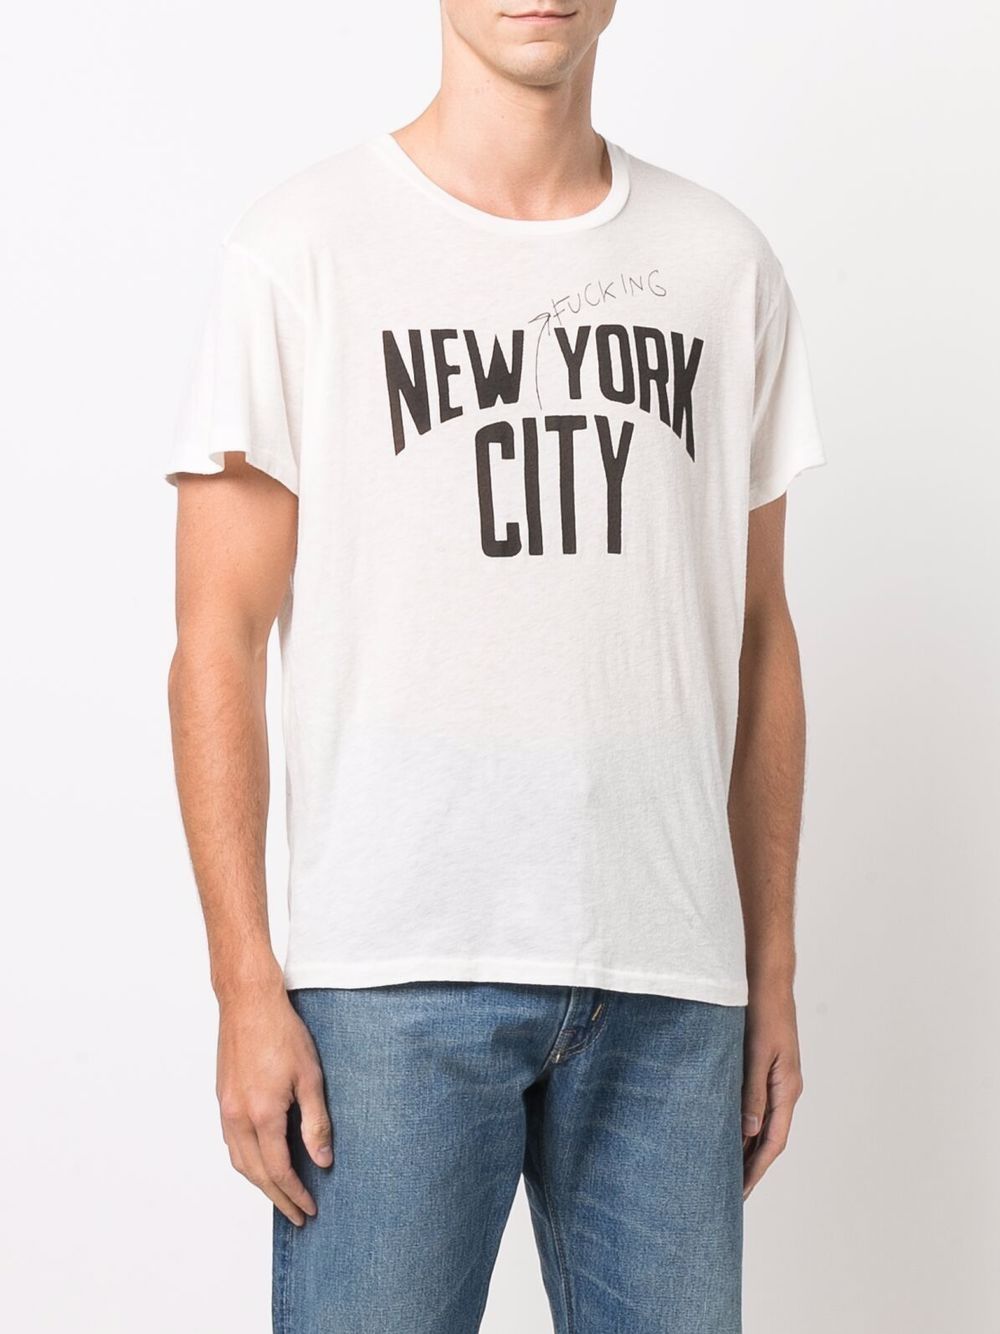 фото R13 футболка new york city